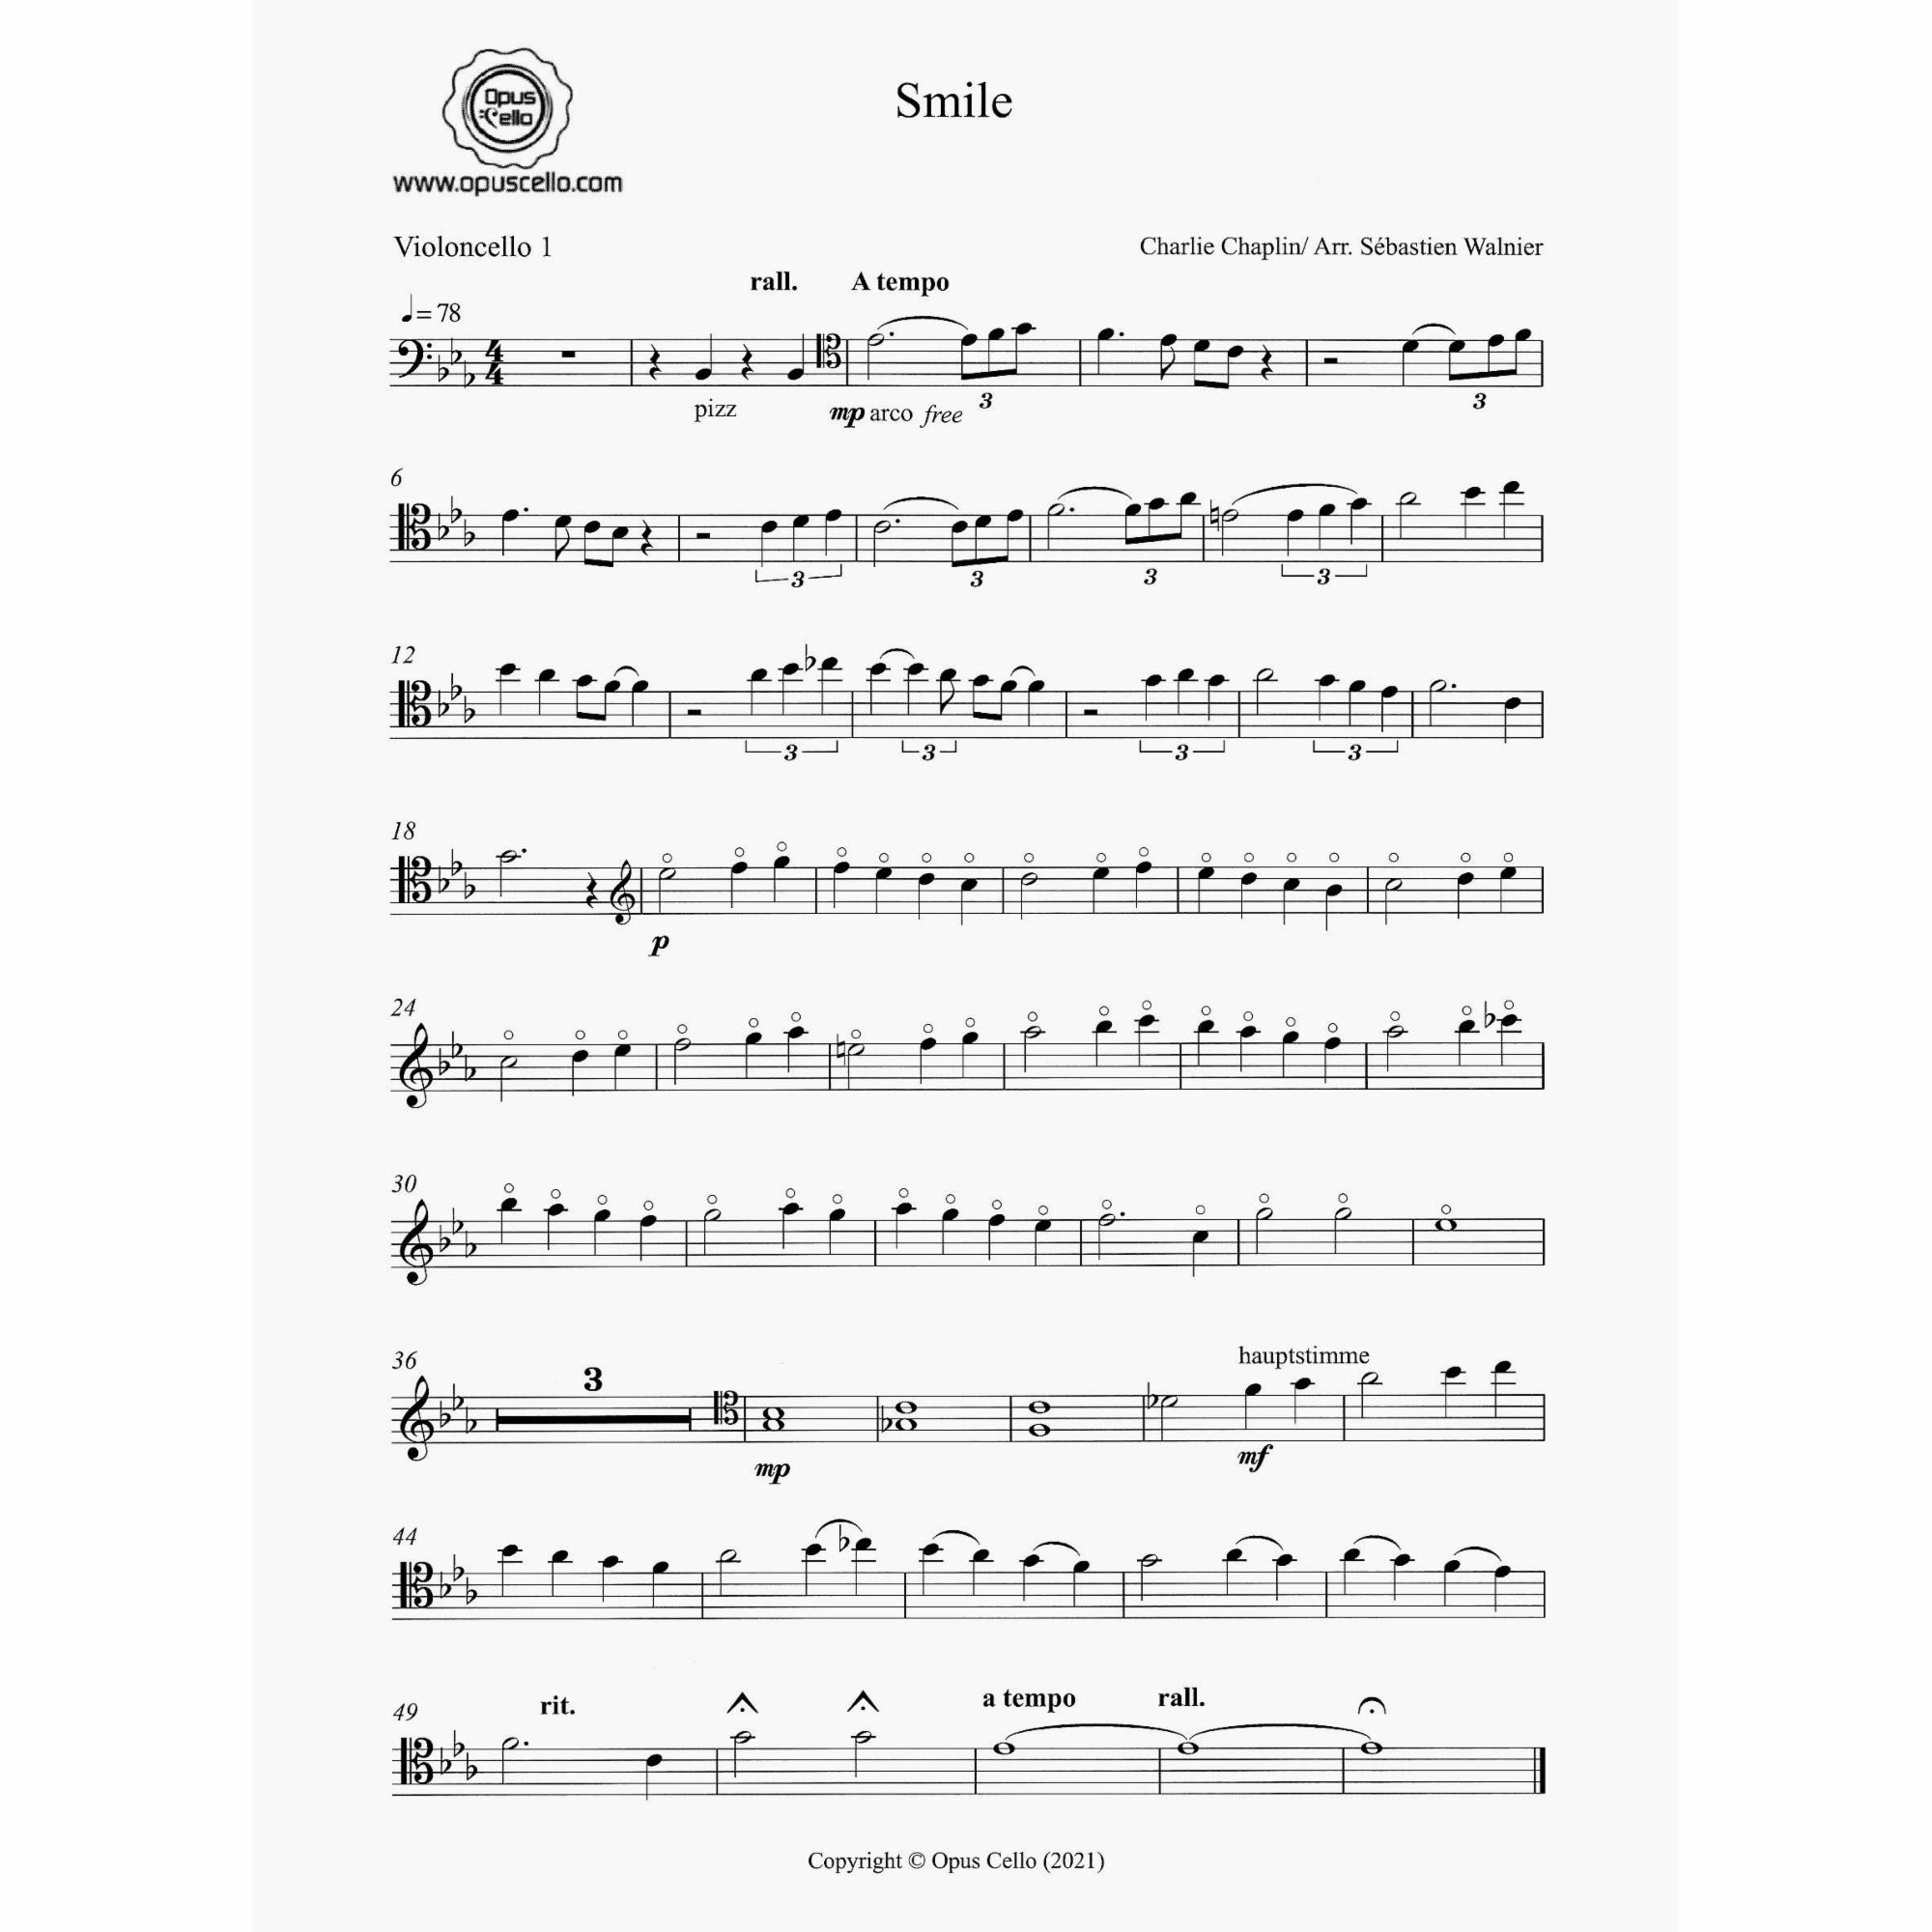 Sample: Eight Cellos, Co. I Part